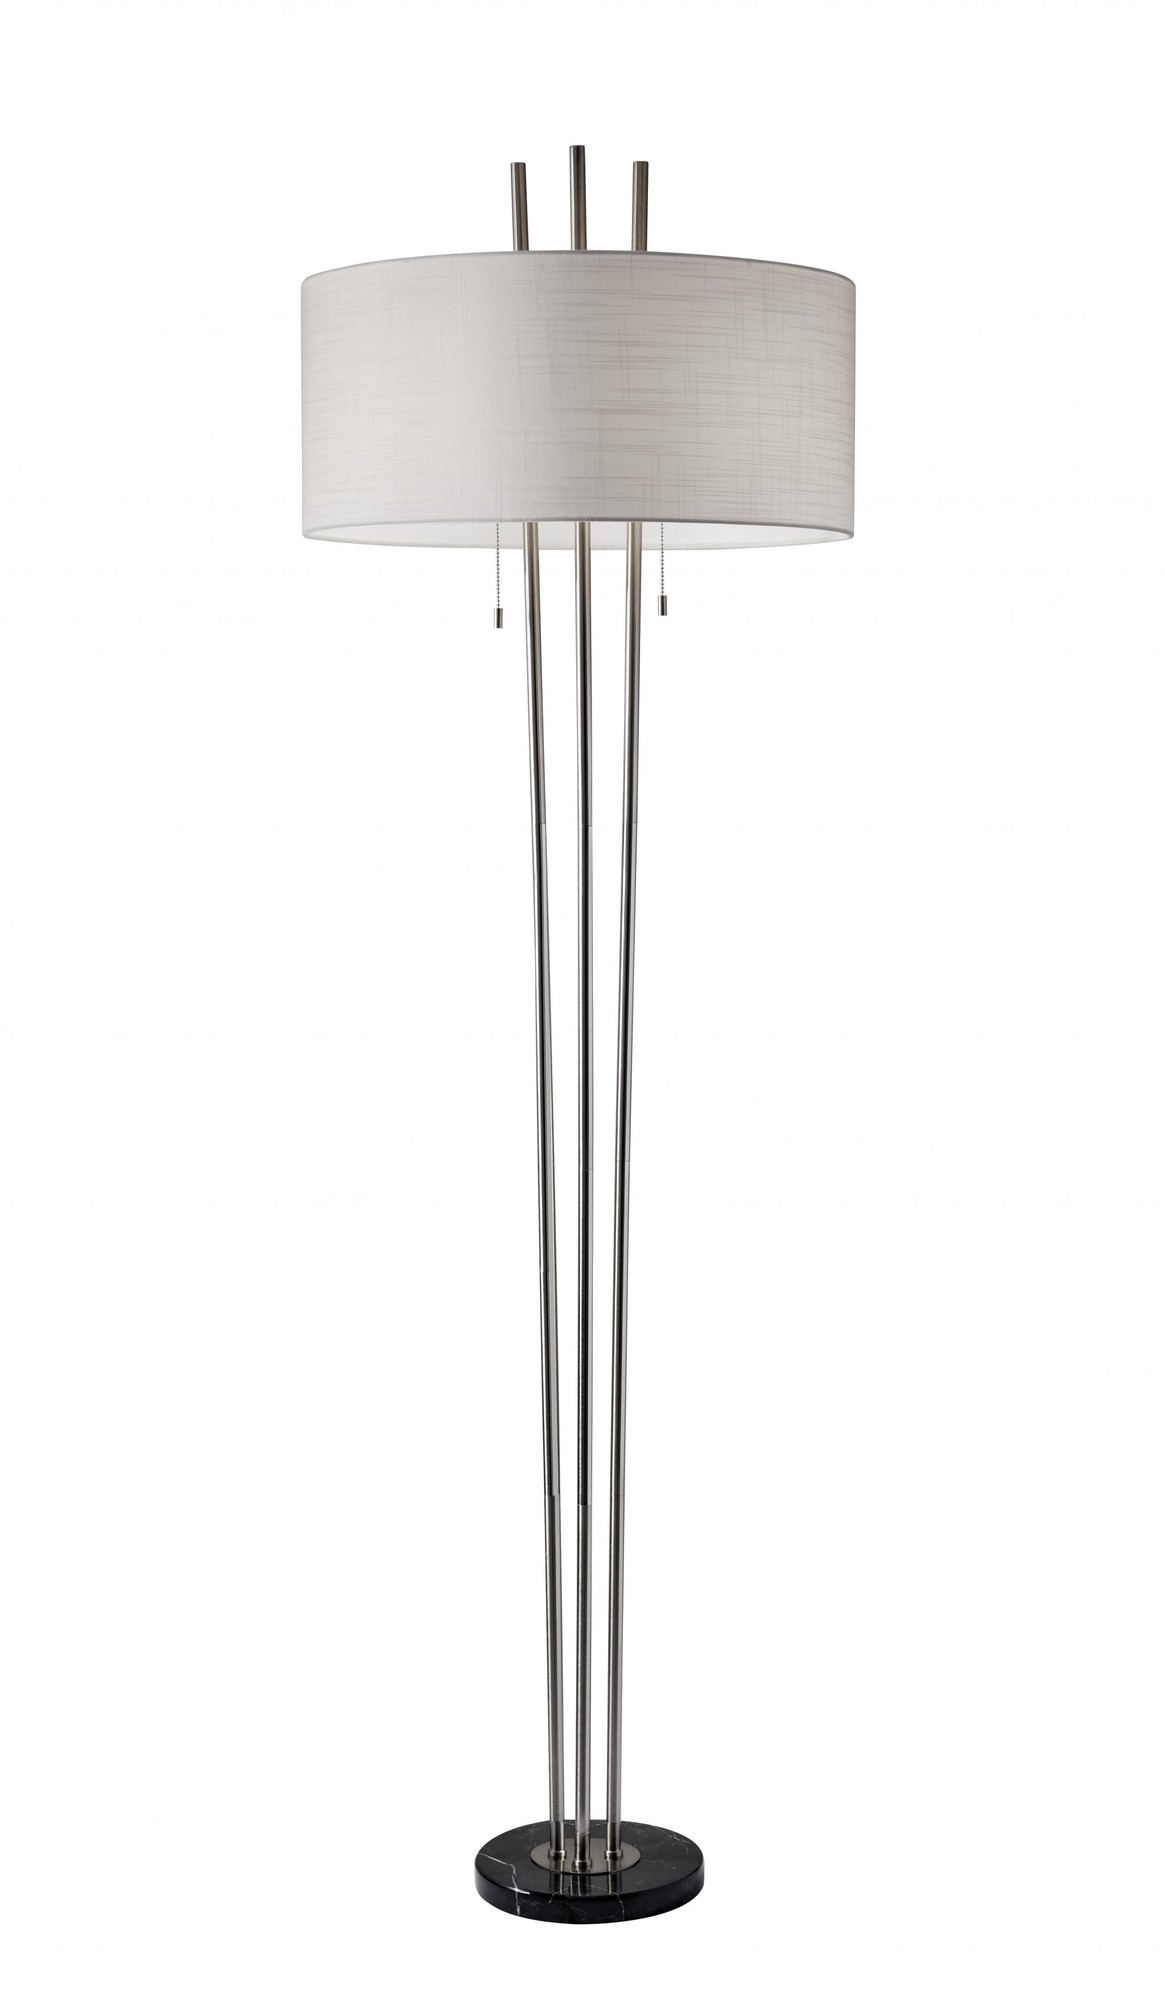 22" X 22" X 71" Brushed Steel Metal Floor Lamp